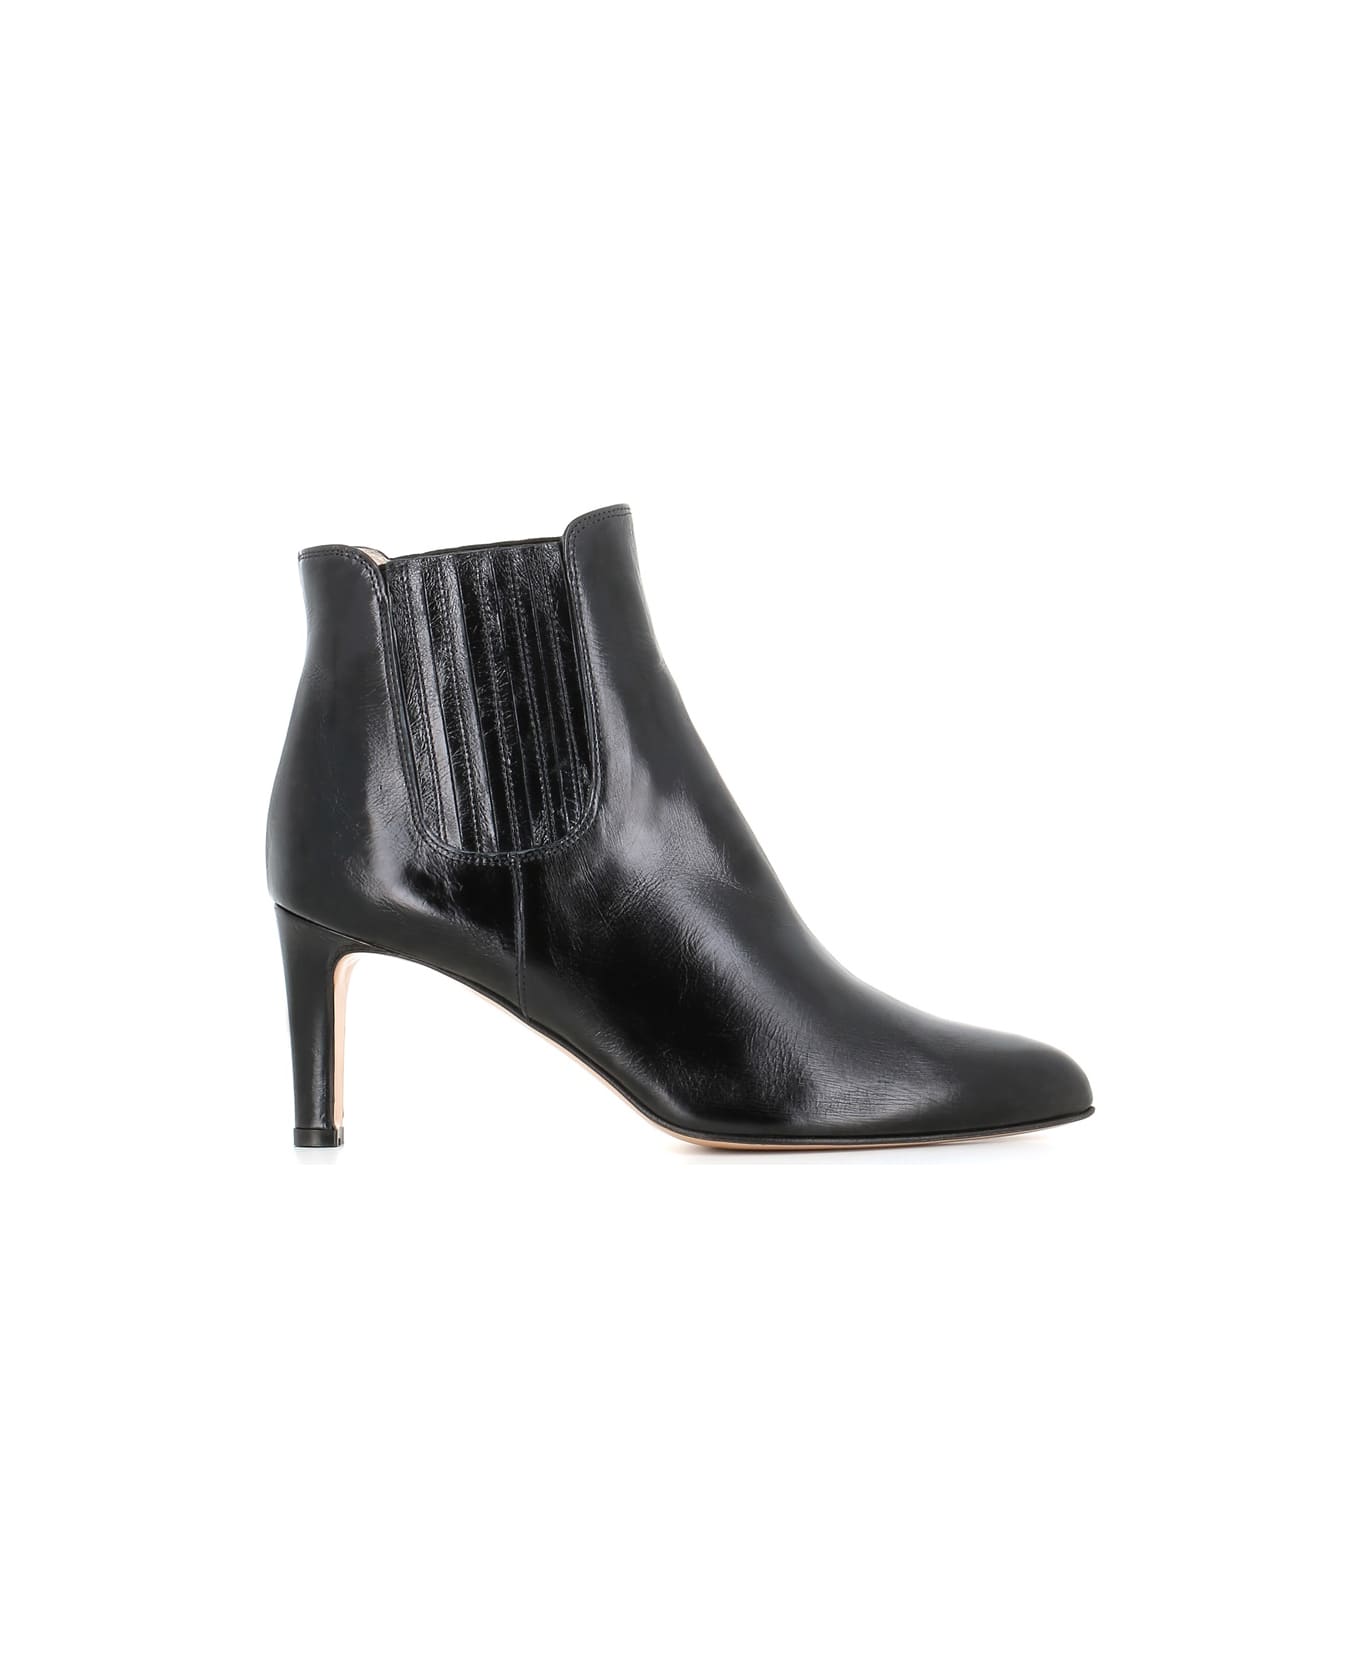 Antonio Barbato Ankle-boots 4813 76 170 - Black